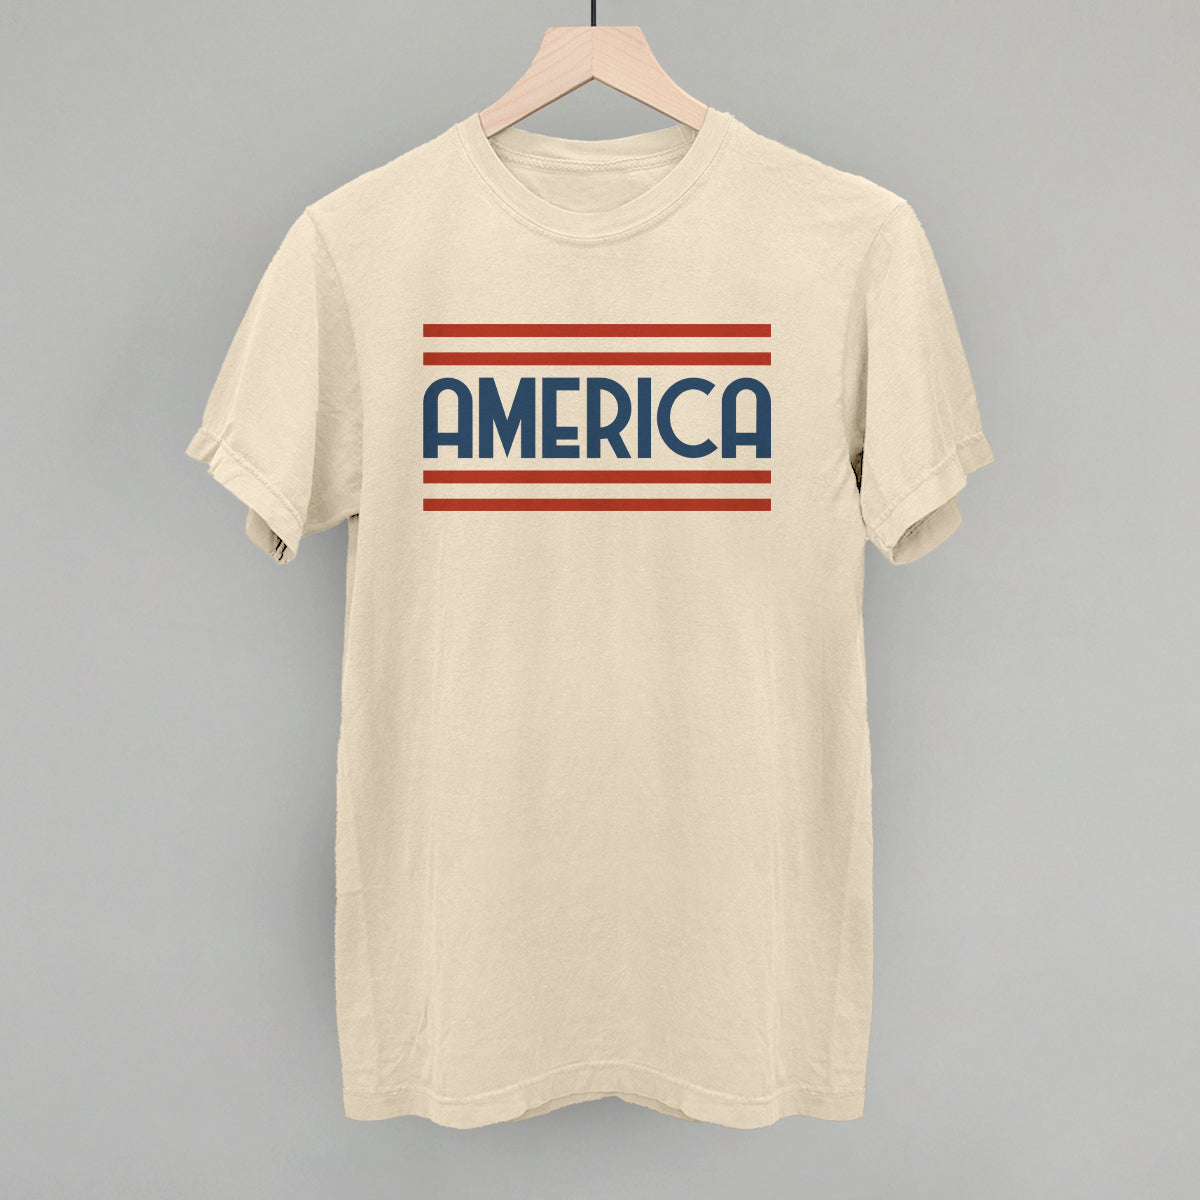 America (Sans Serif)